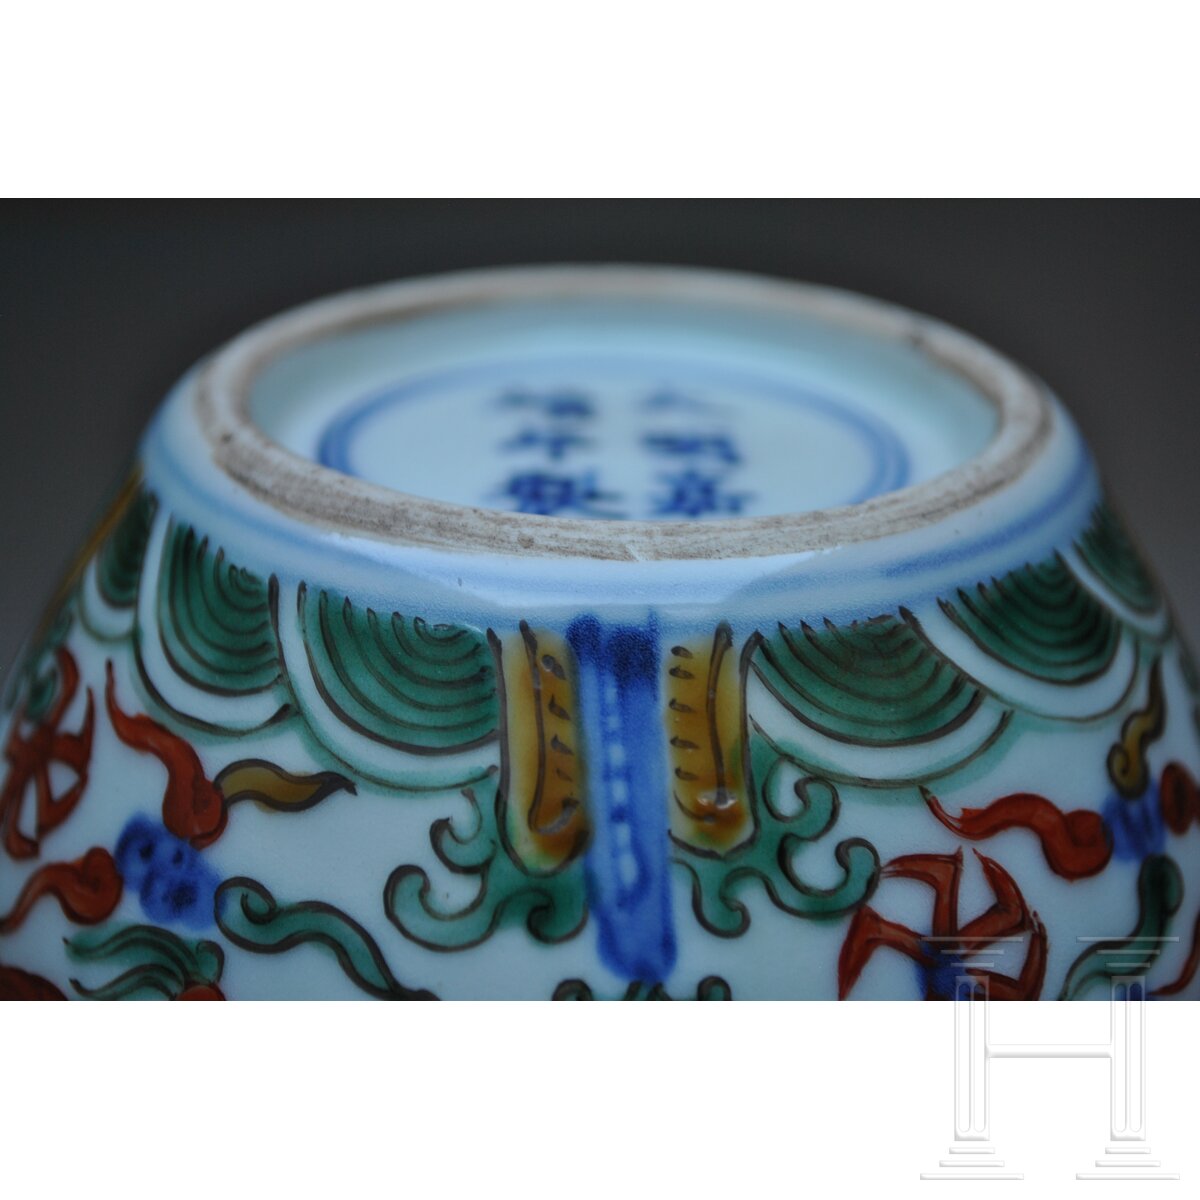 Doppelkürbis-Wucai-Vase mit Jiajing-Sechszeichenmarke, China, 20. Jhdt. - Image 25 of 28